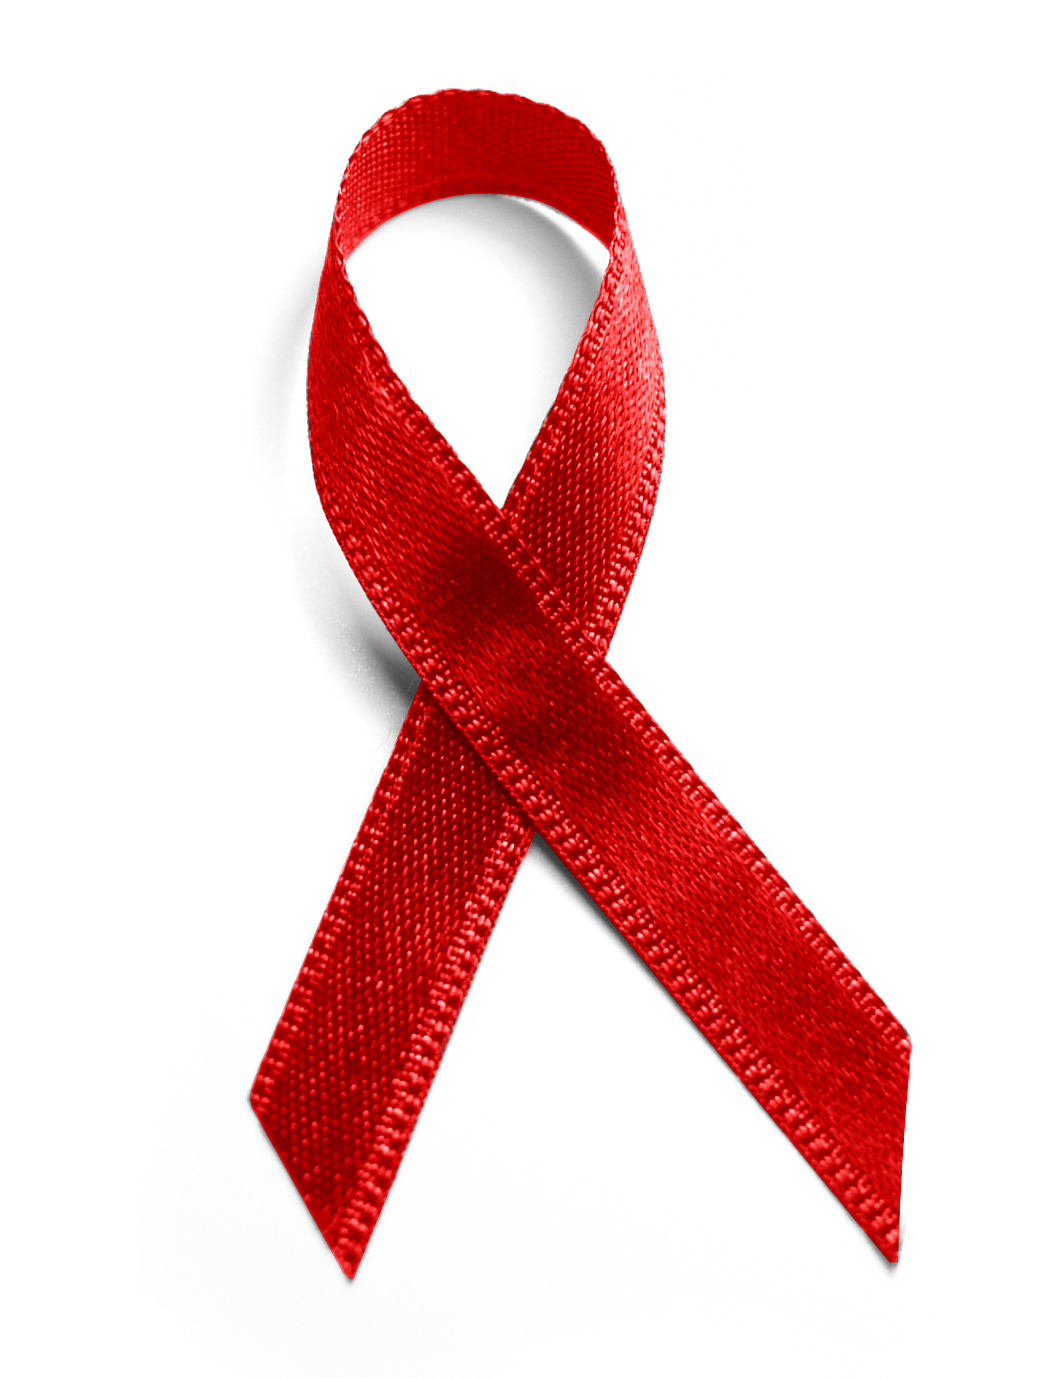 aids-ribbon3707.jpg